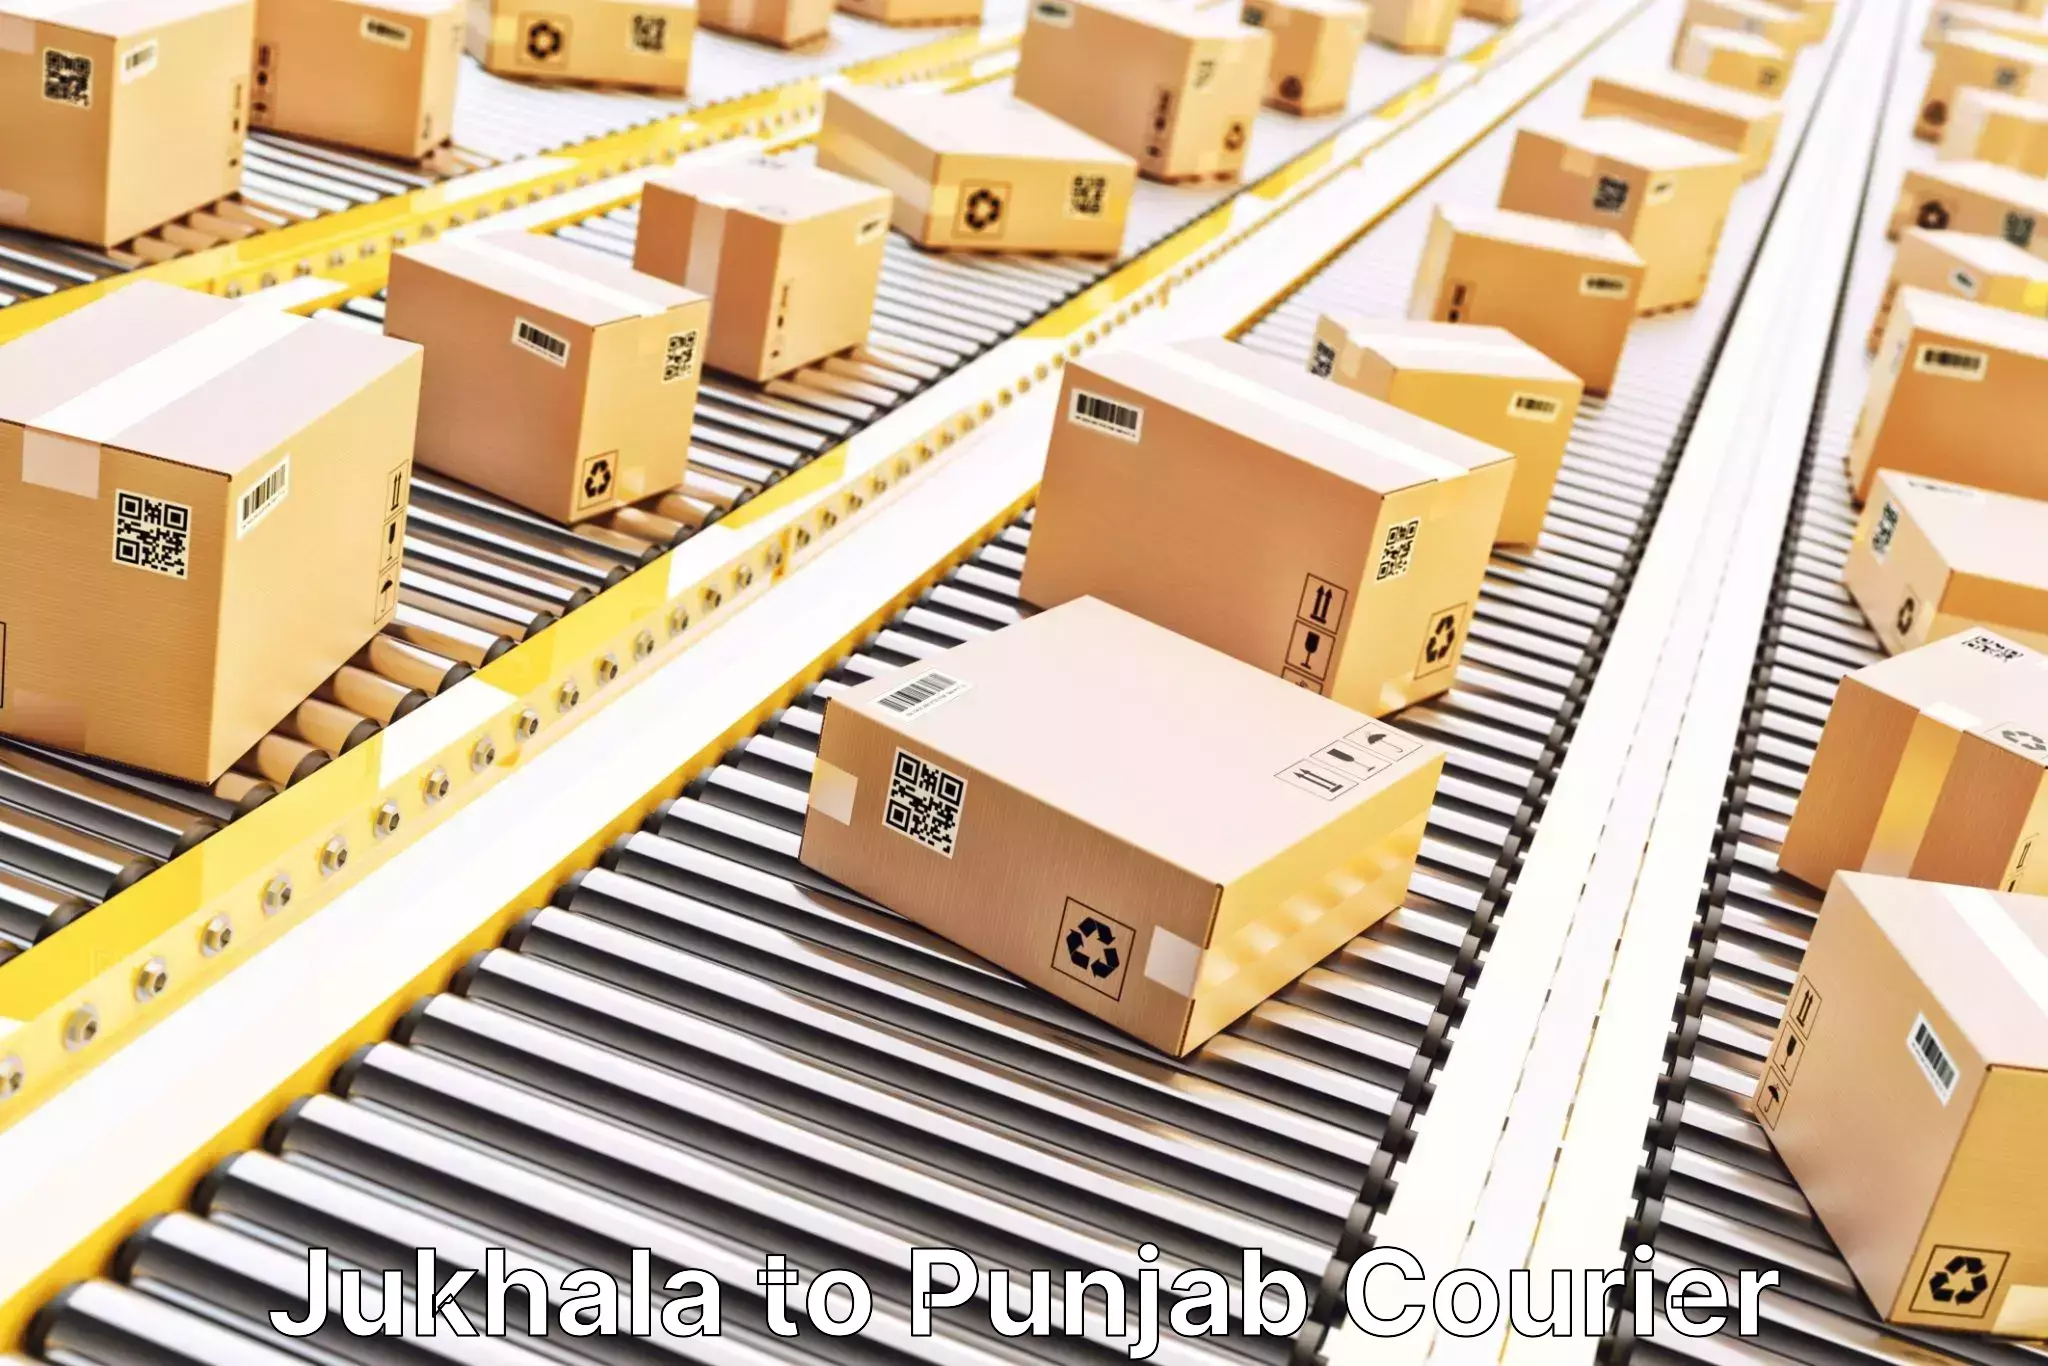 Efficient freight transportation Jukhala to Punjab